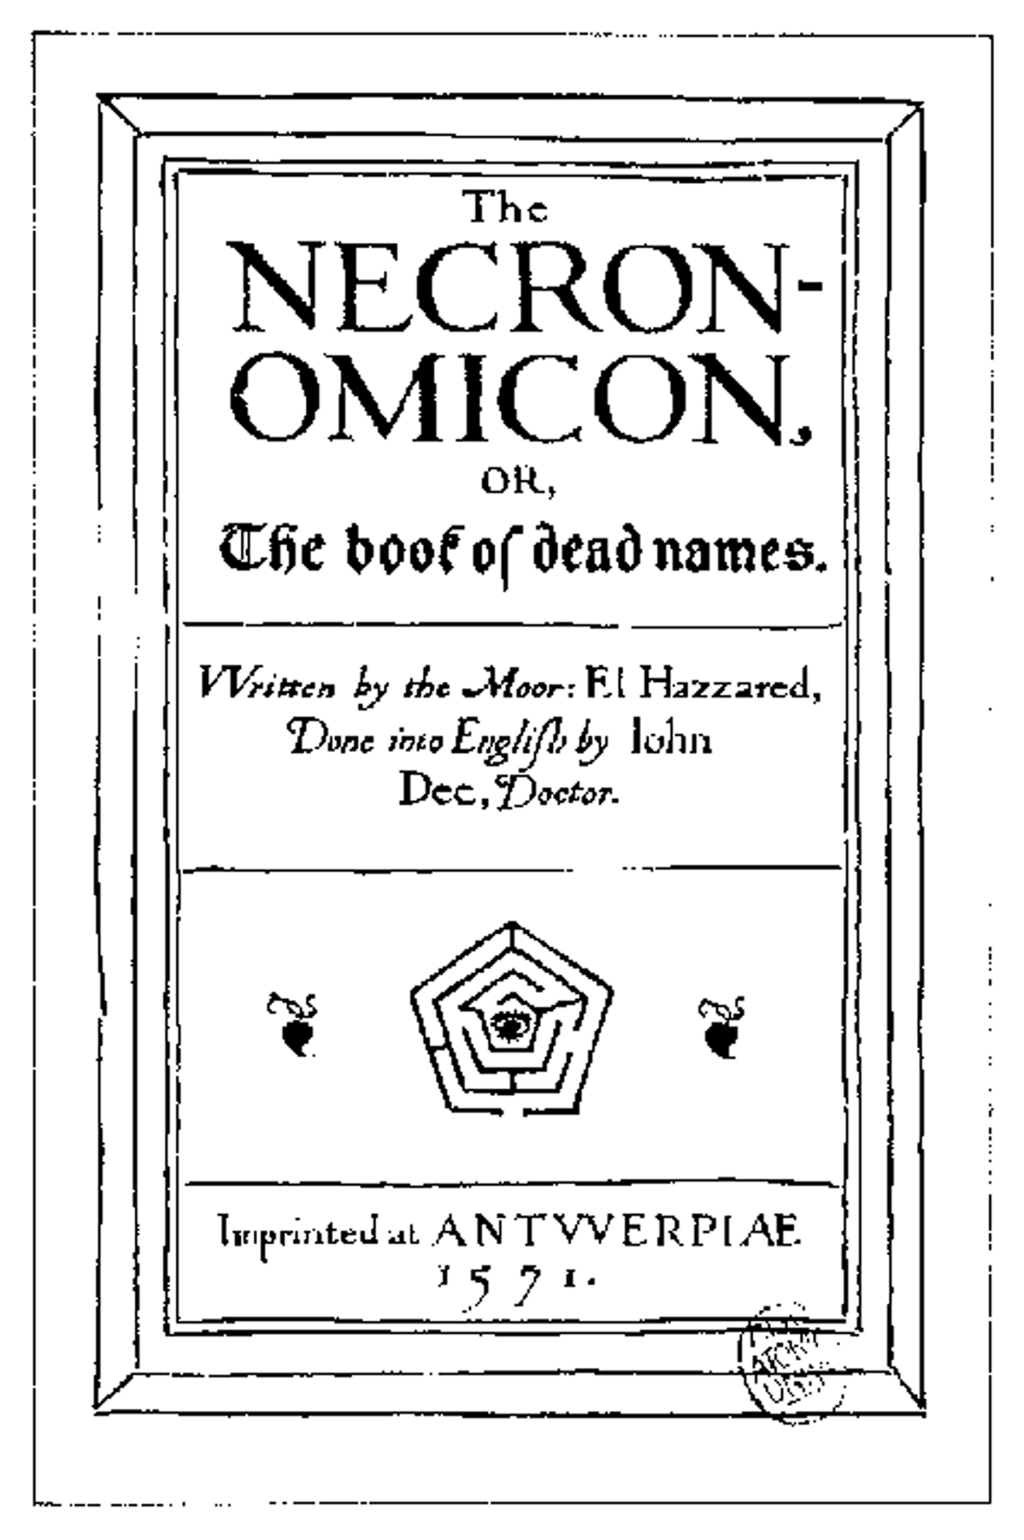 The Necronomicon or The Book of dead names